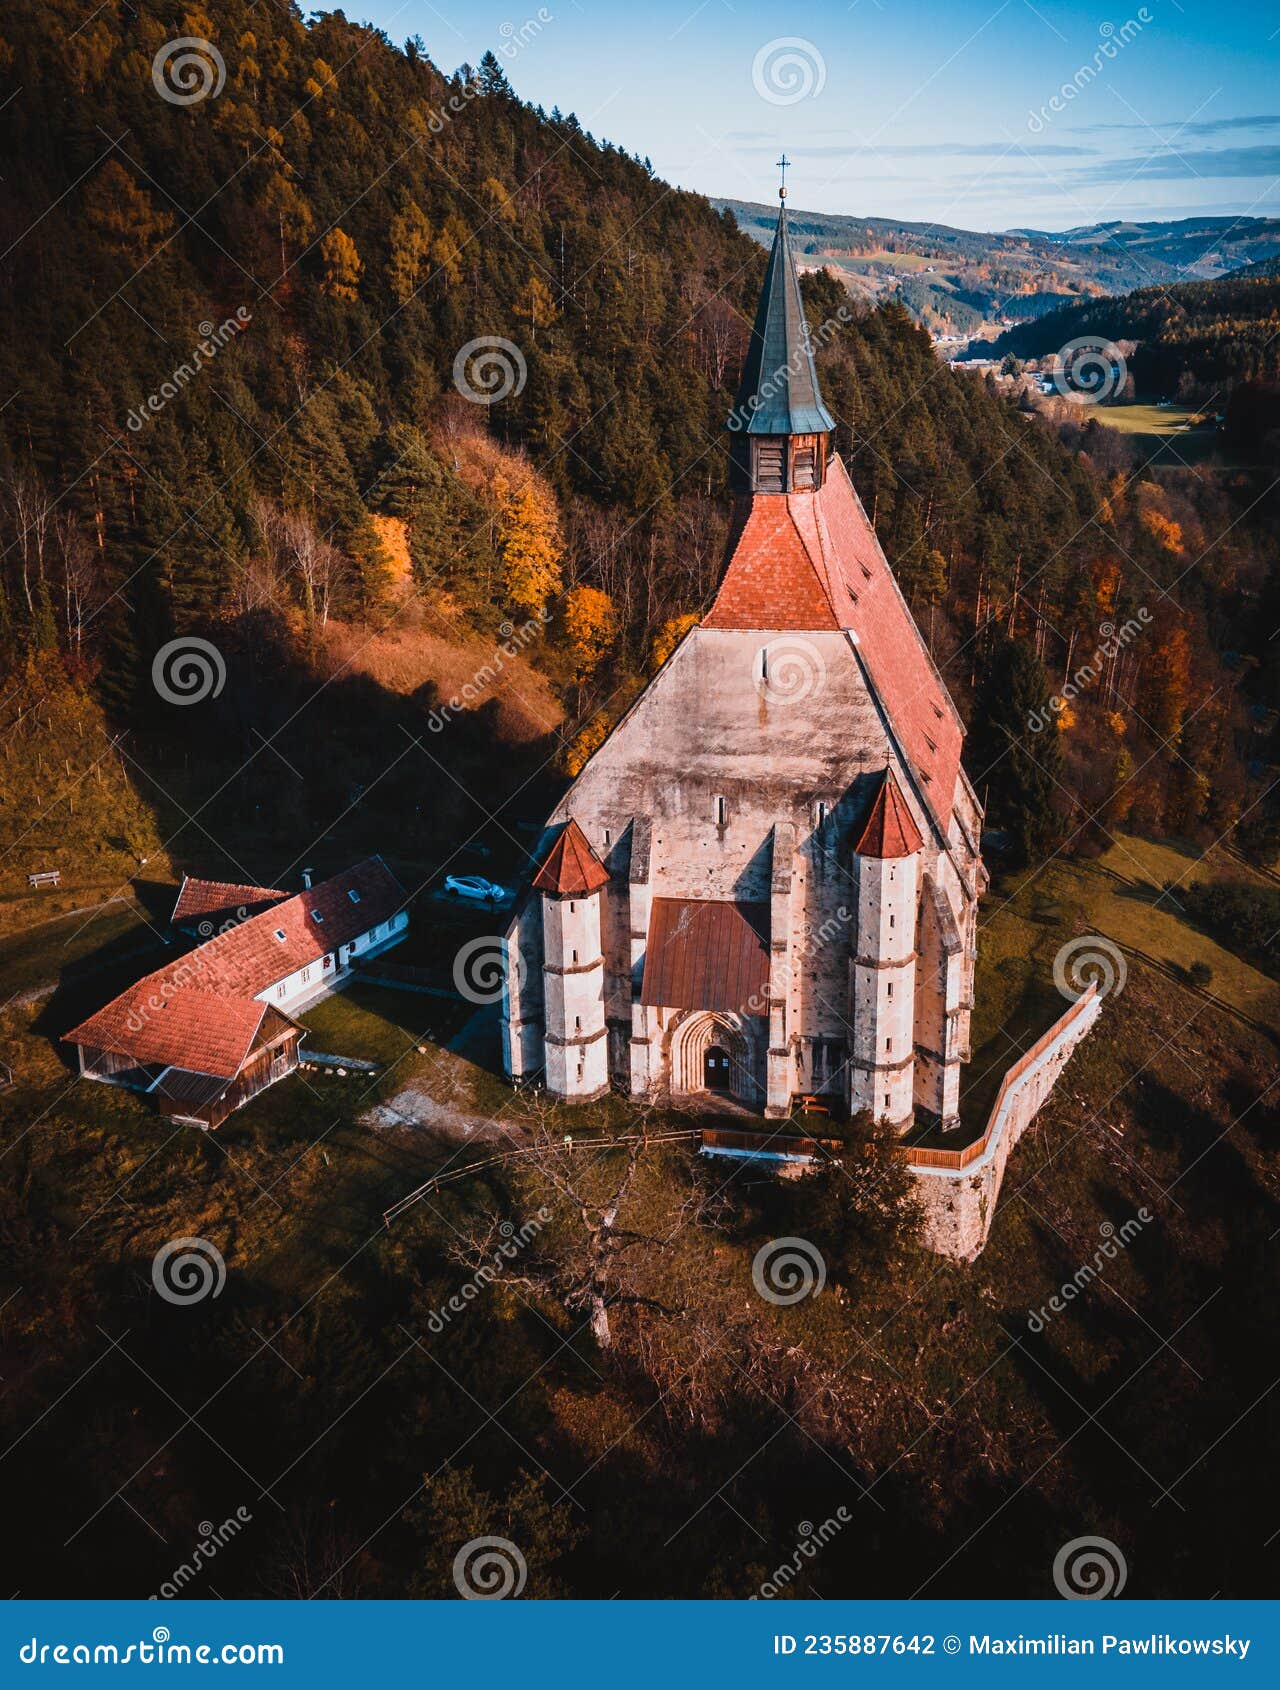 the wofgangskirche, a gothic catholic church in the austrian village kirchberg am wechsel aerial view